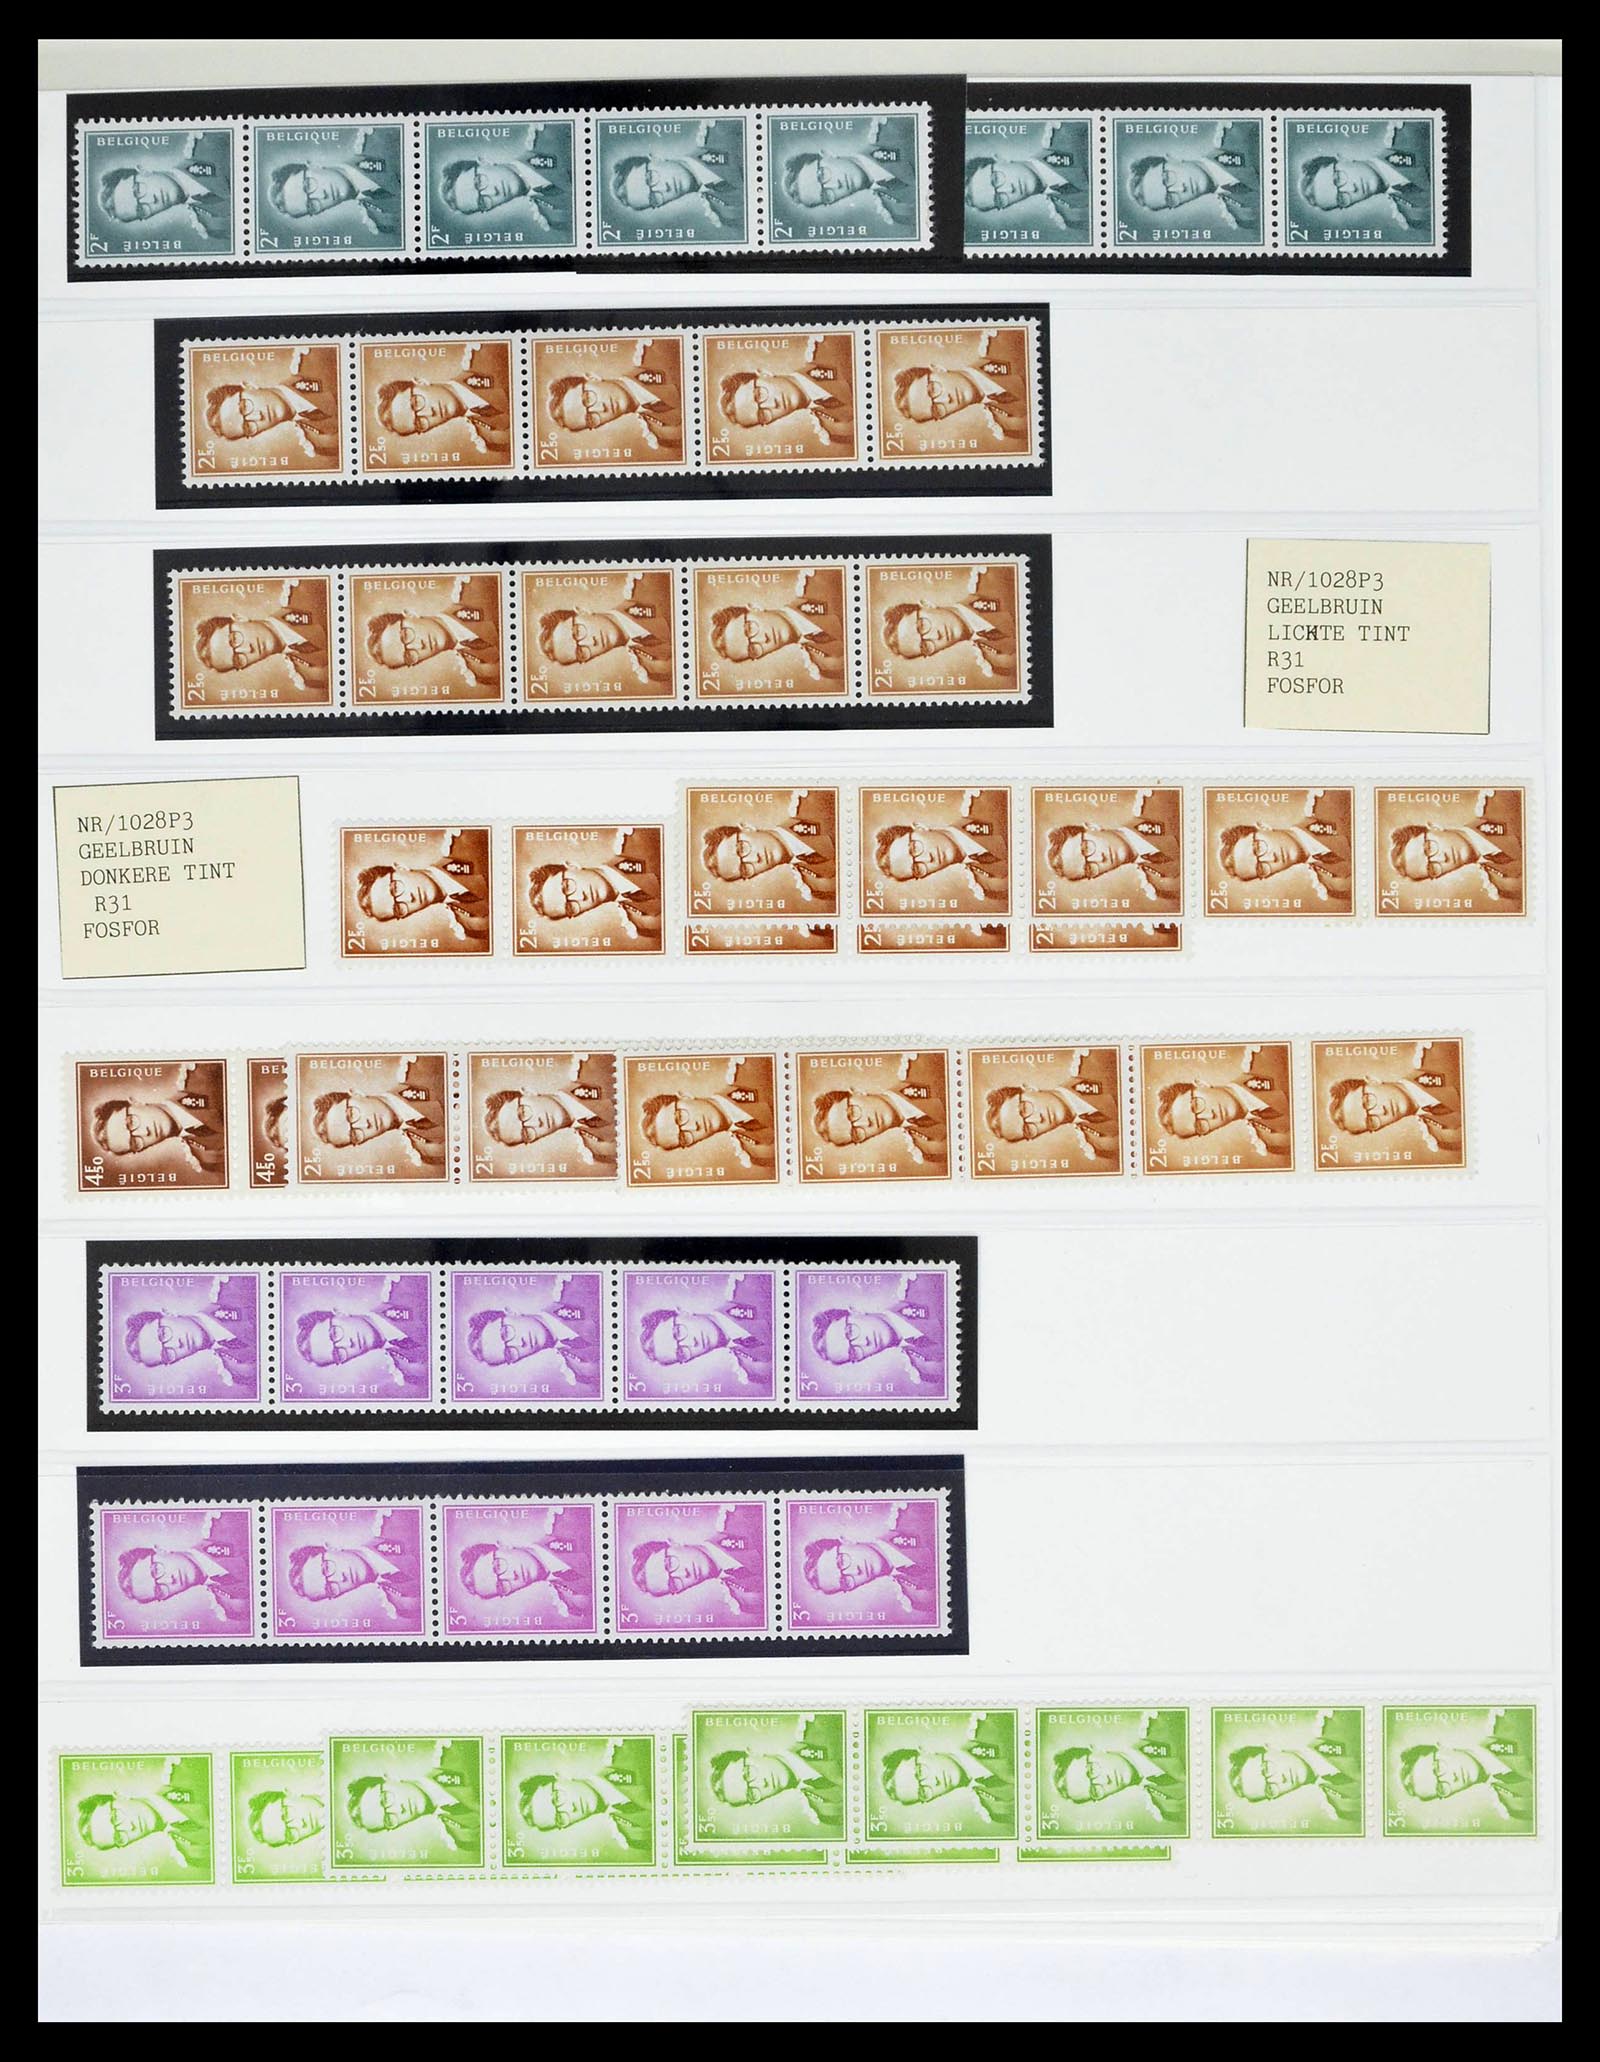 39229 0048 - Stamp collection 39229 Belgium Boudewijn with glasses 1952-1975.